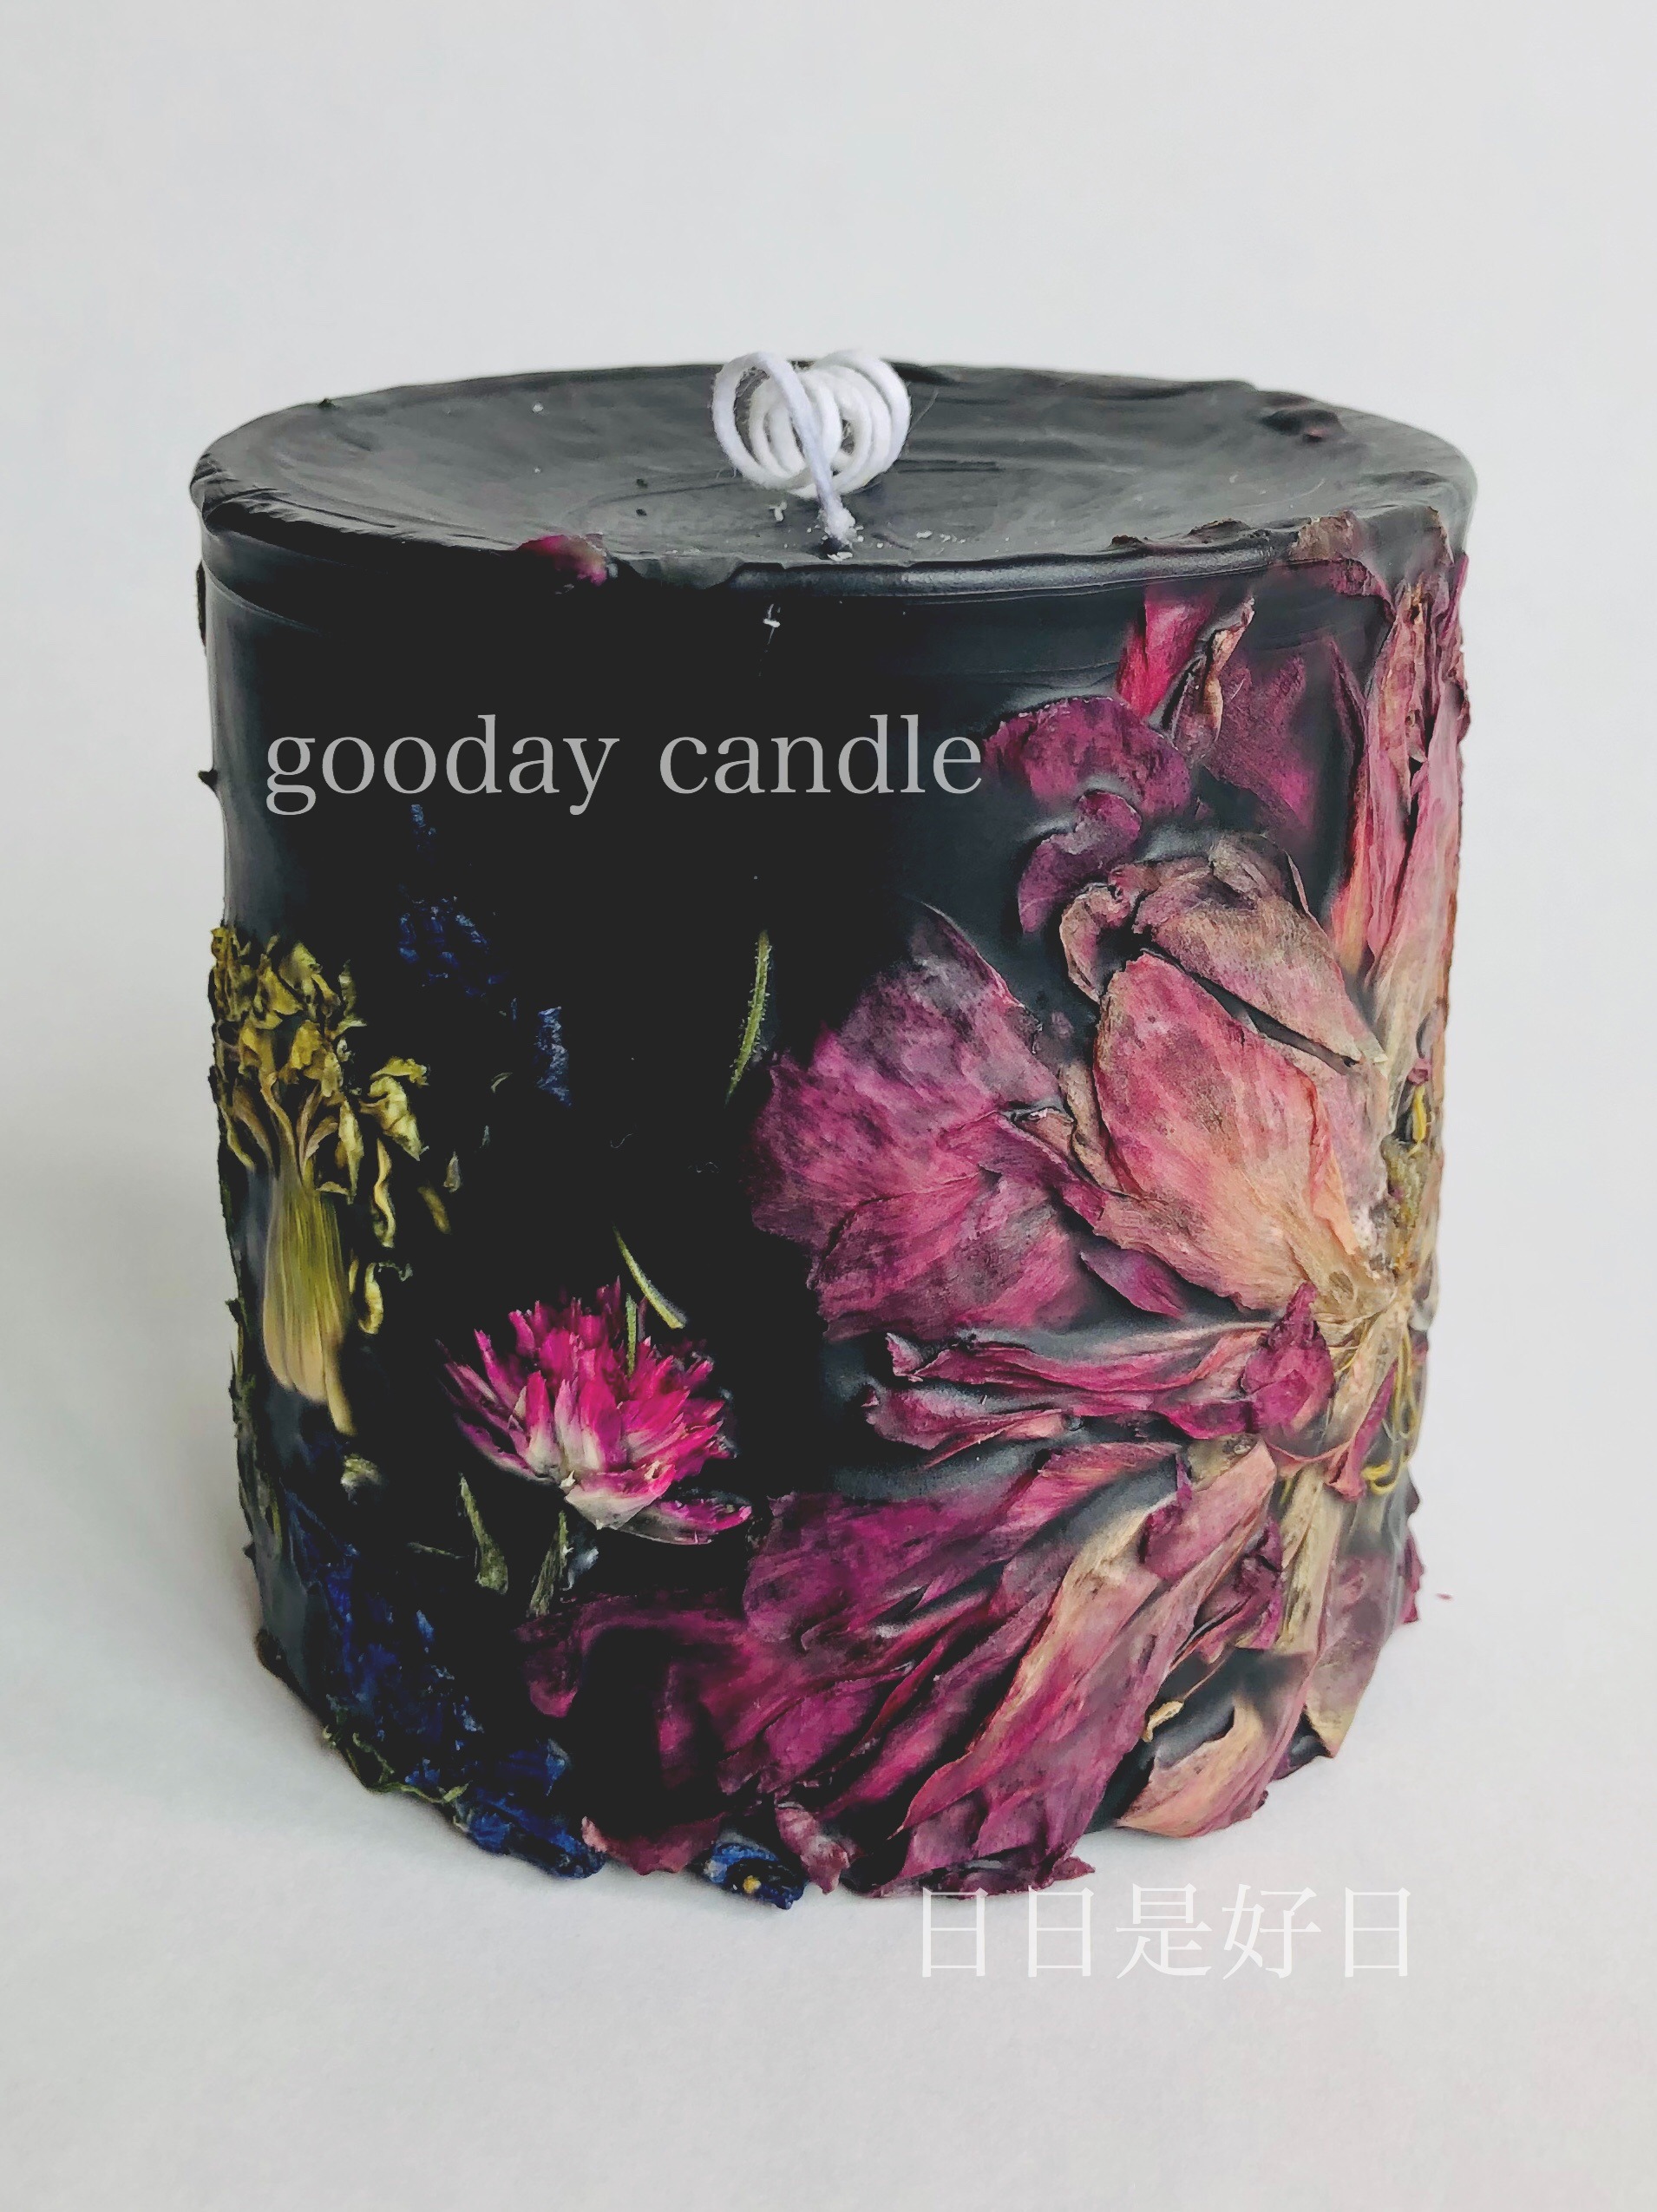 gooday candle